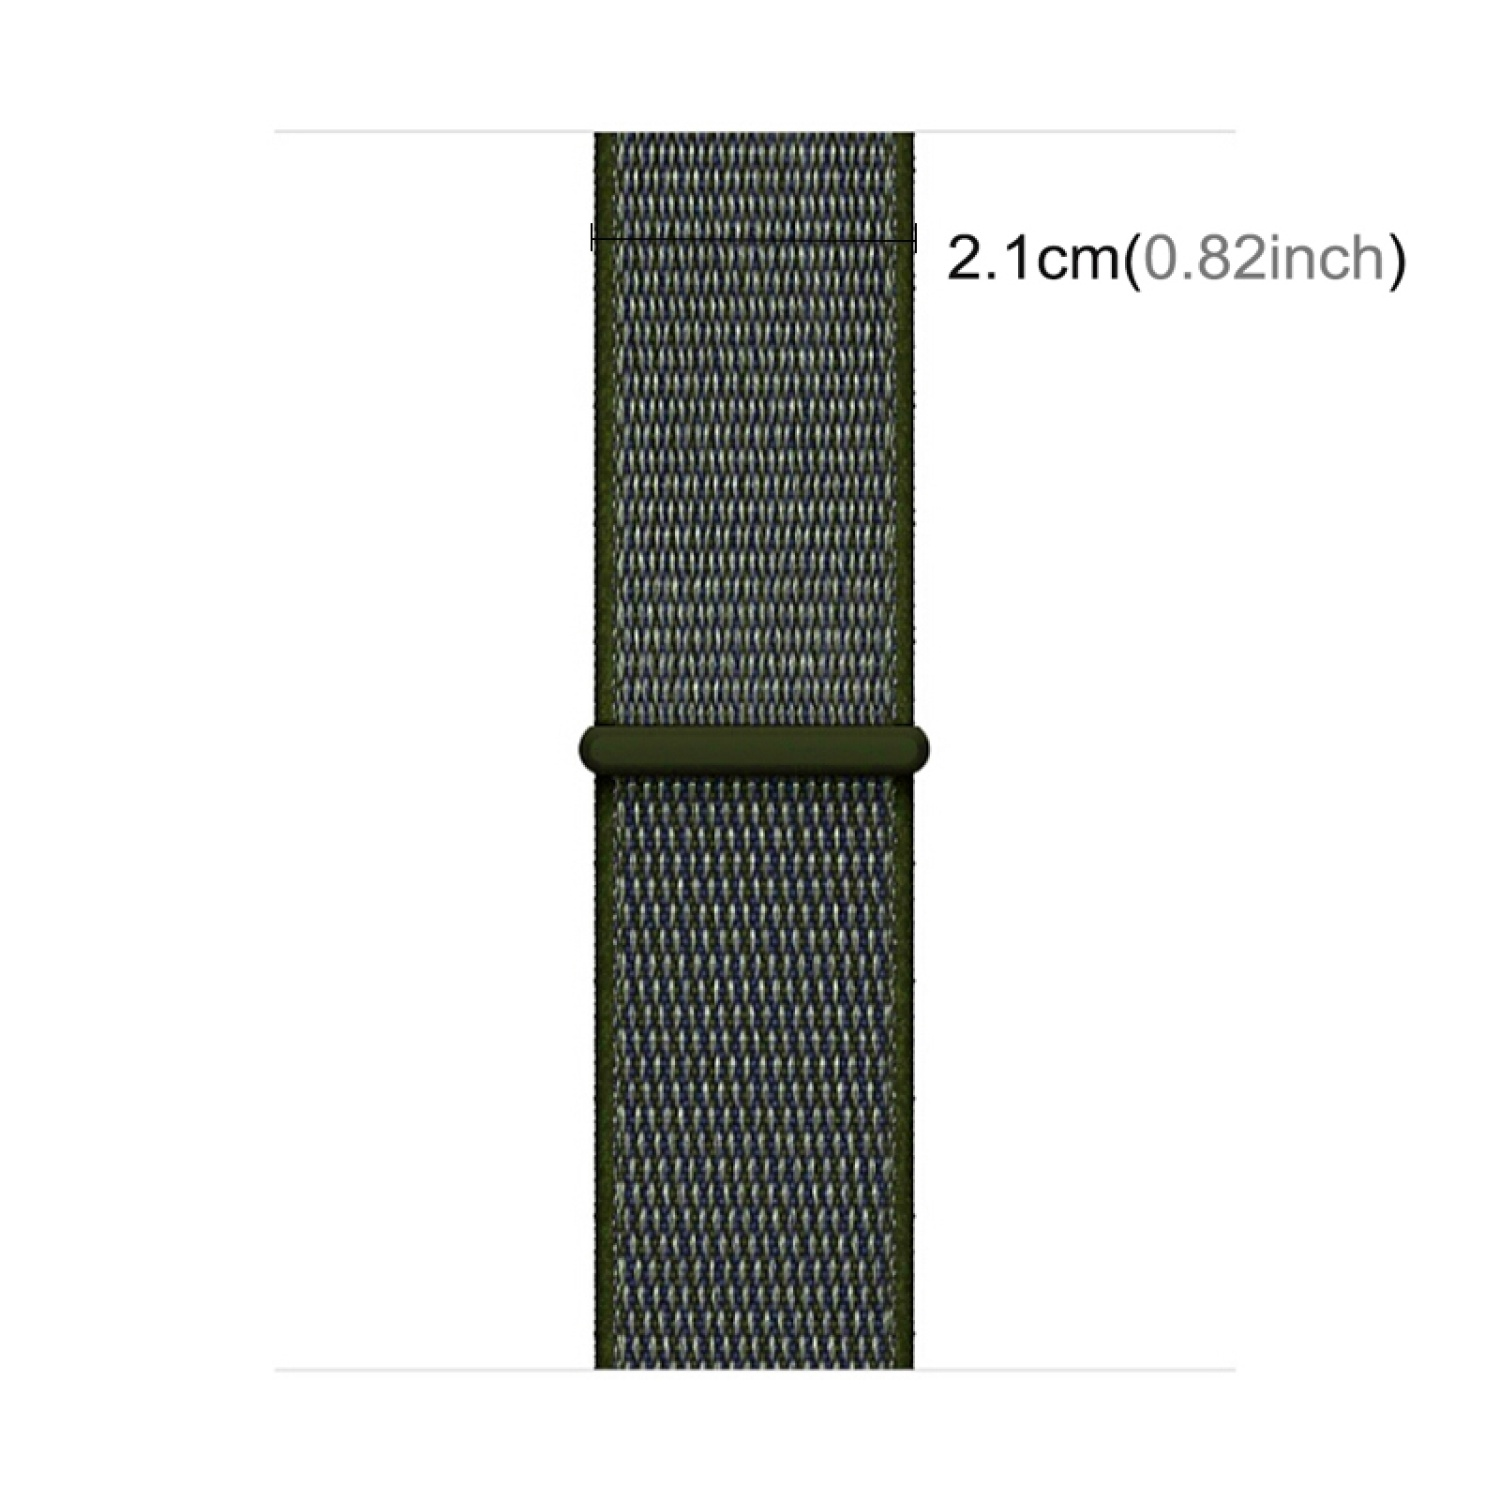 KÖNIG 45mm, Sportarmband, Ersatzarmband, DESIGN Grün 7 Series Watch Apple,